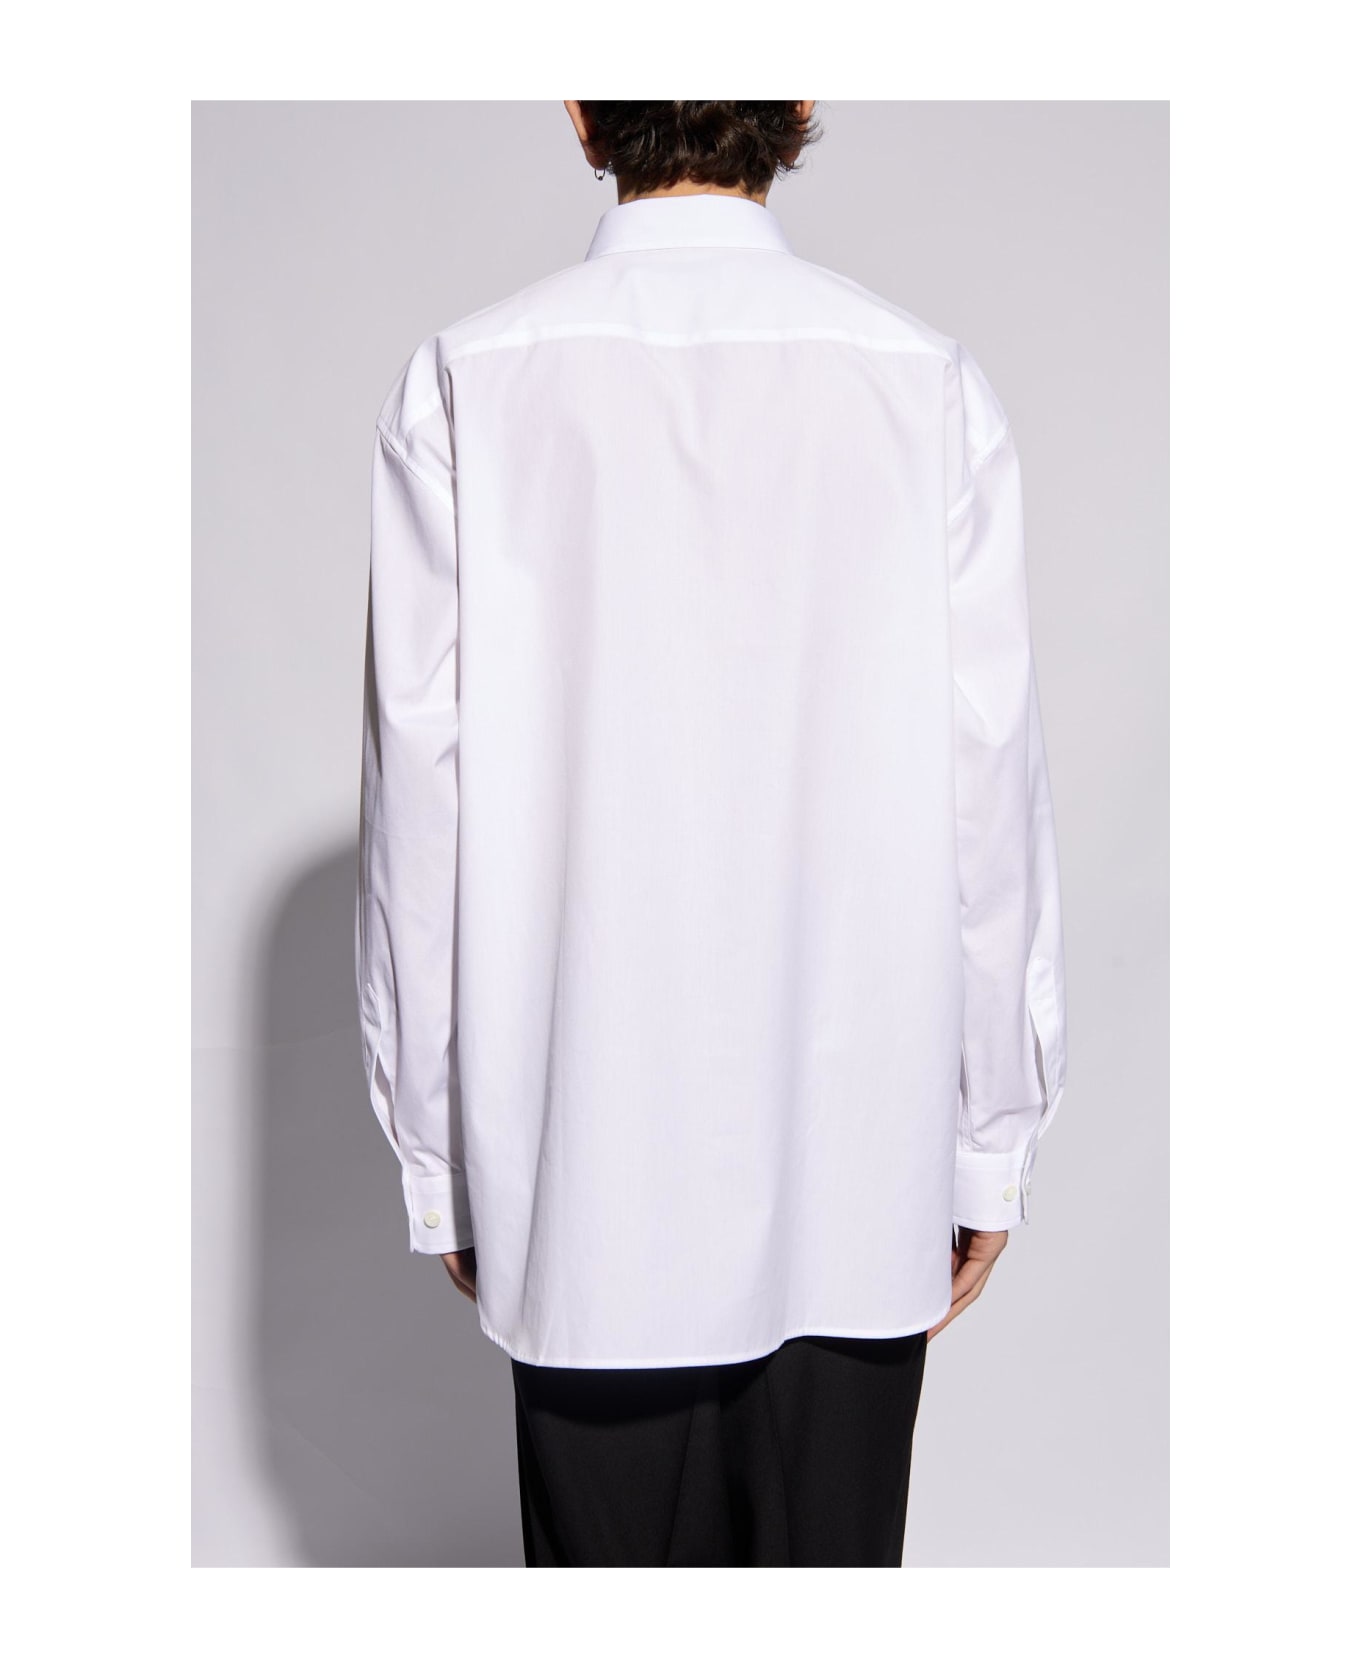 Dries Van Noten Shirt With Pinstripes - WHITE